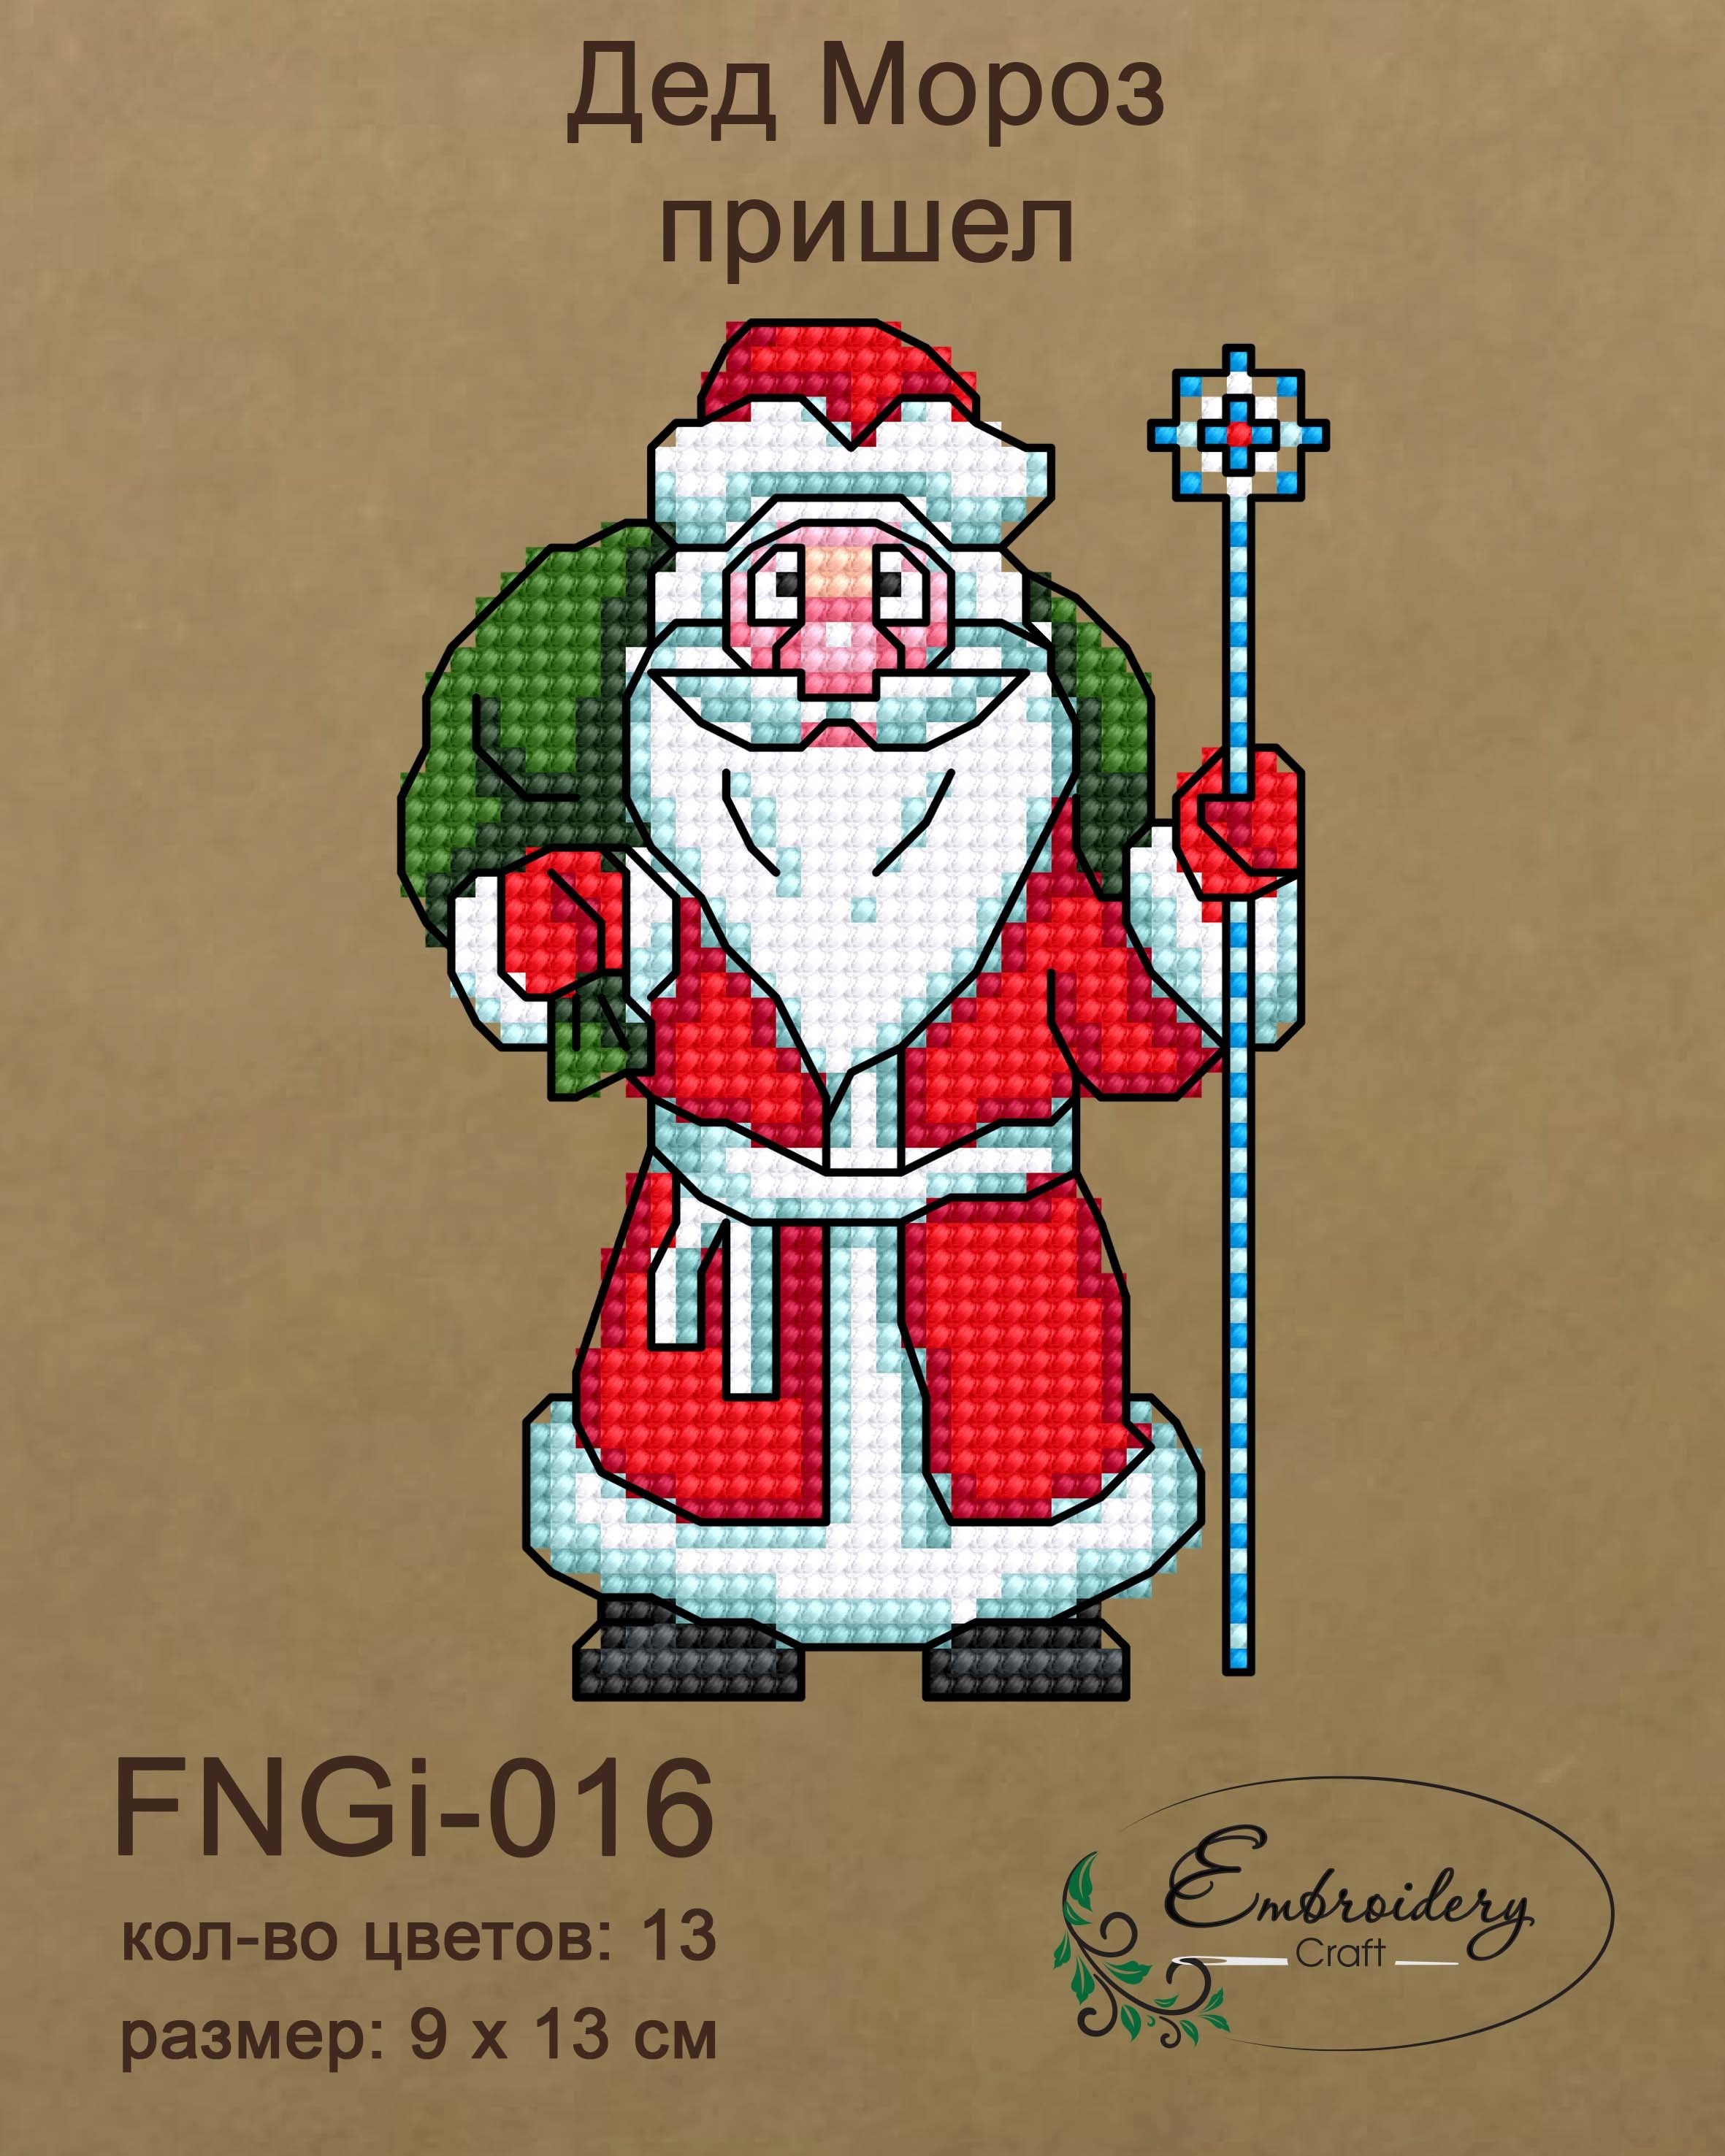 FNNGi-016 Дед Мороз пришел